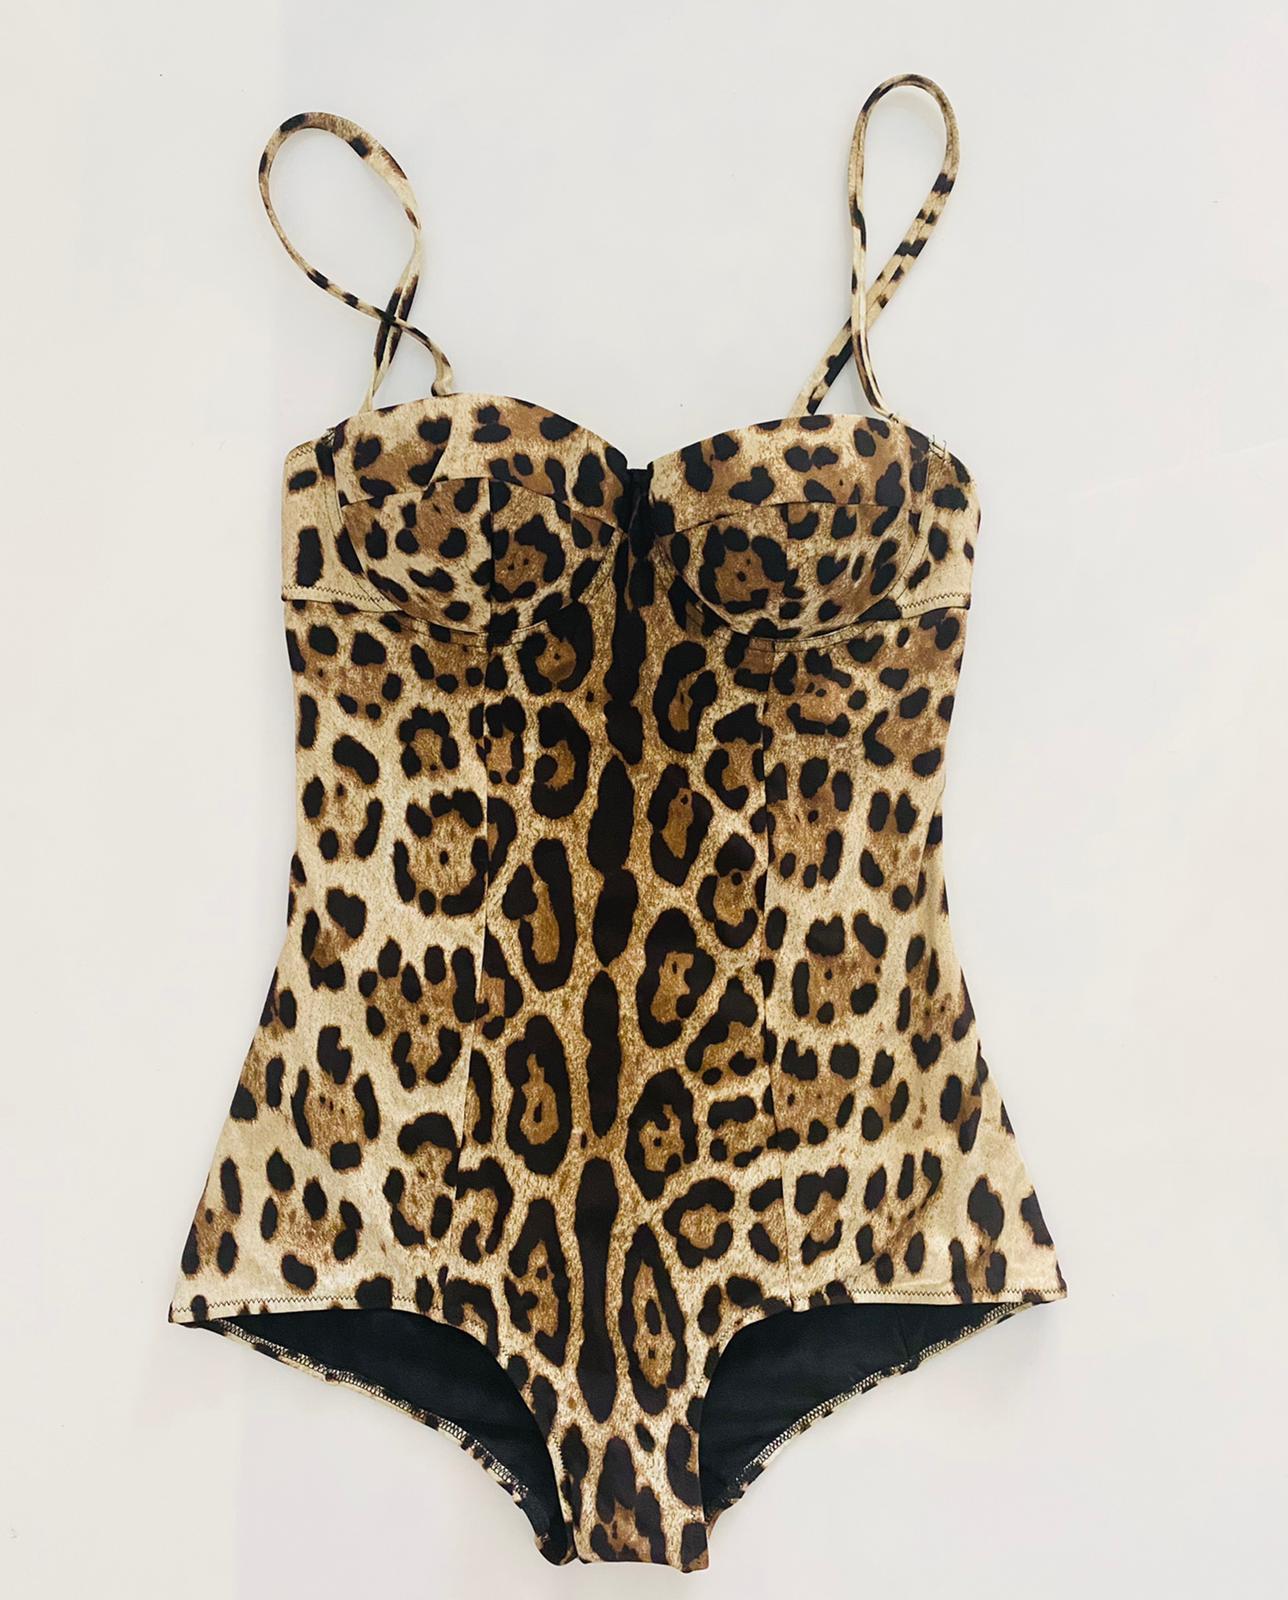 Dolce & Gabbana Brown Leopard One-piece Full Swimsuit Swimwear Beachwear Bikini 1